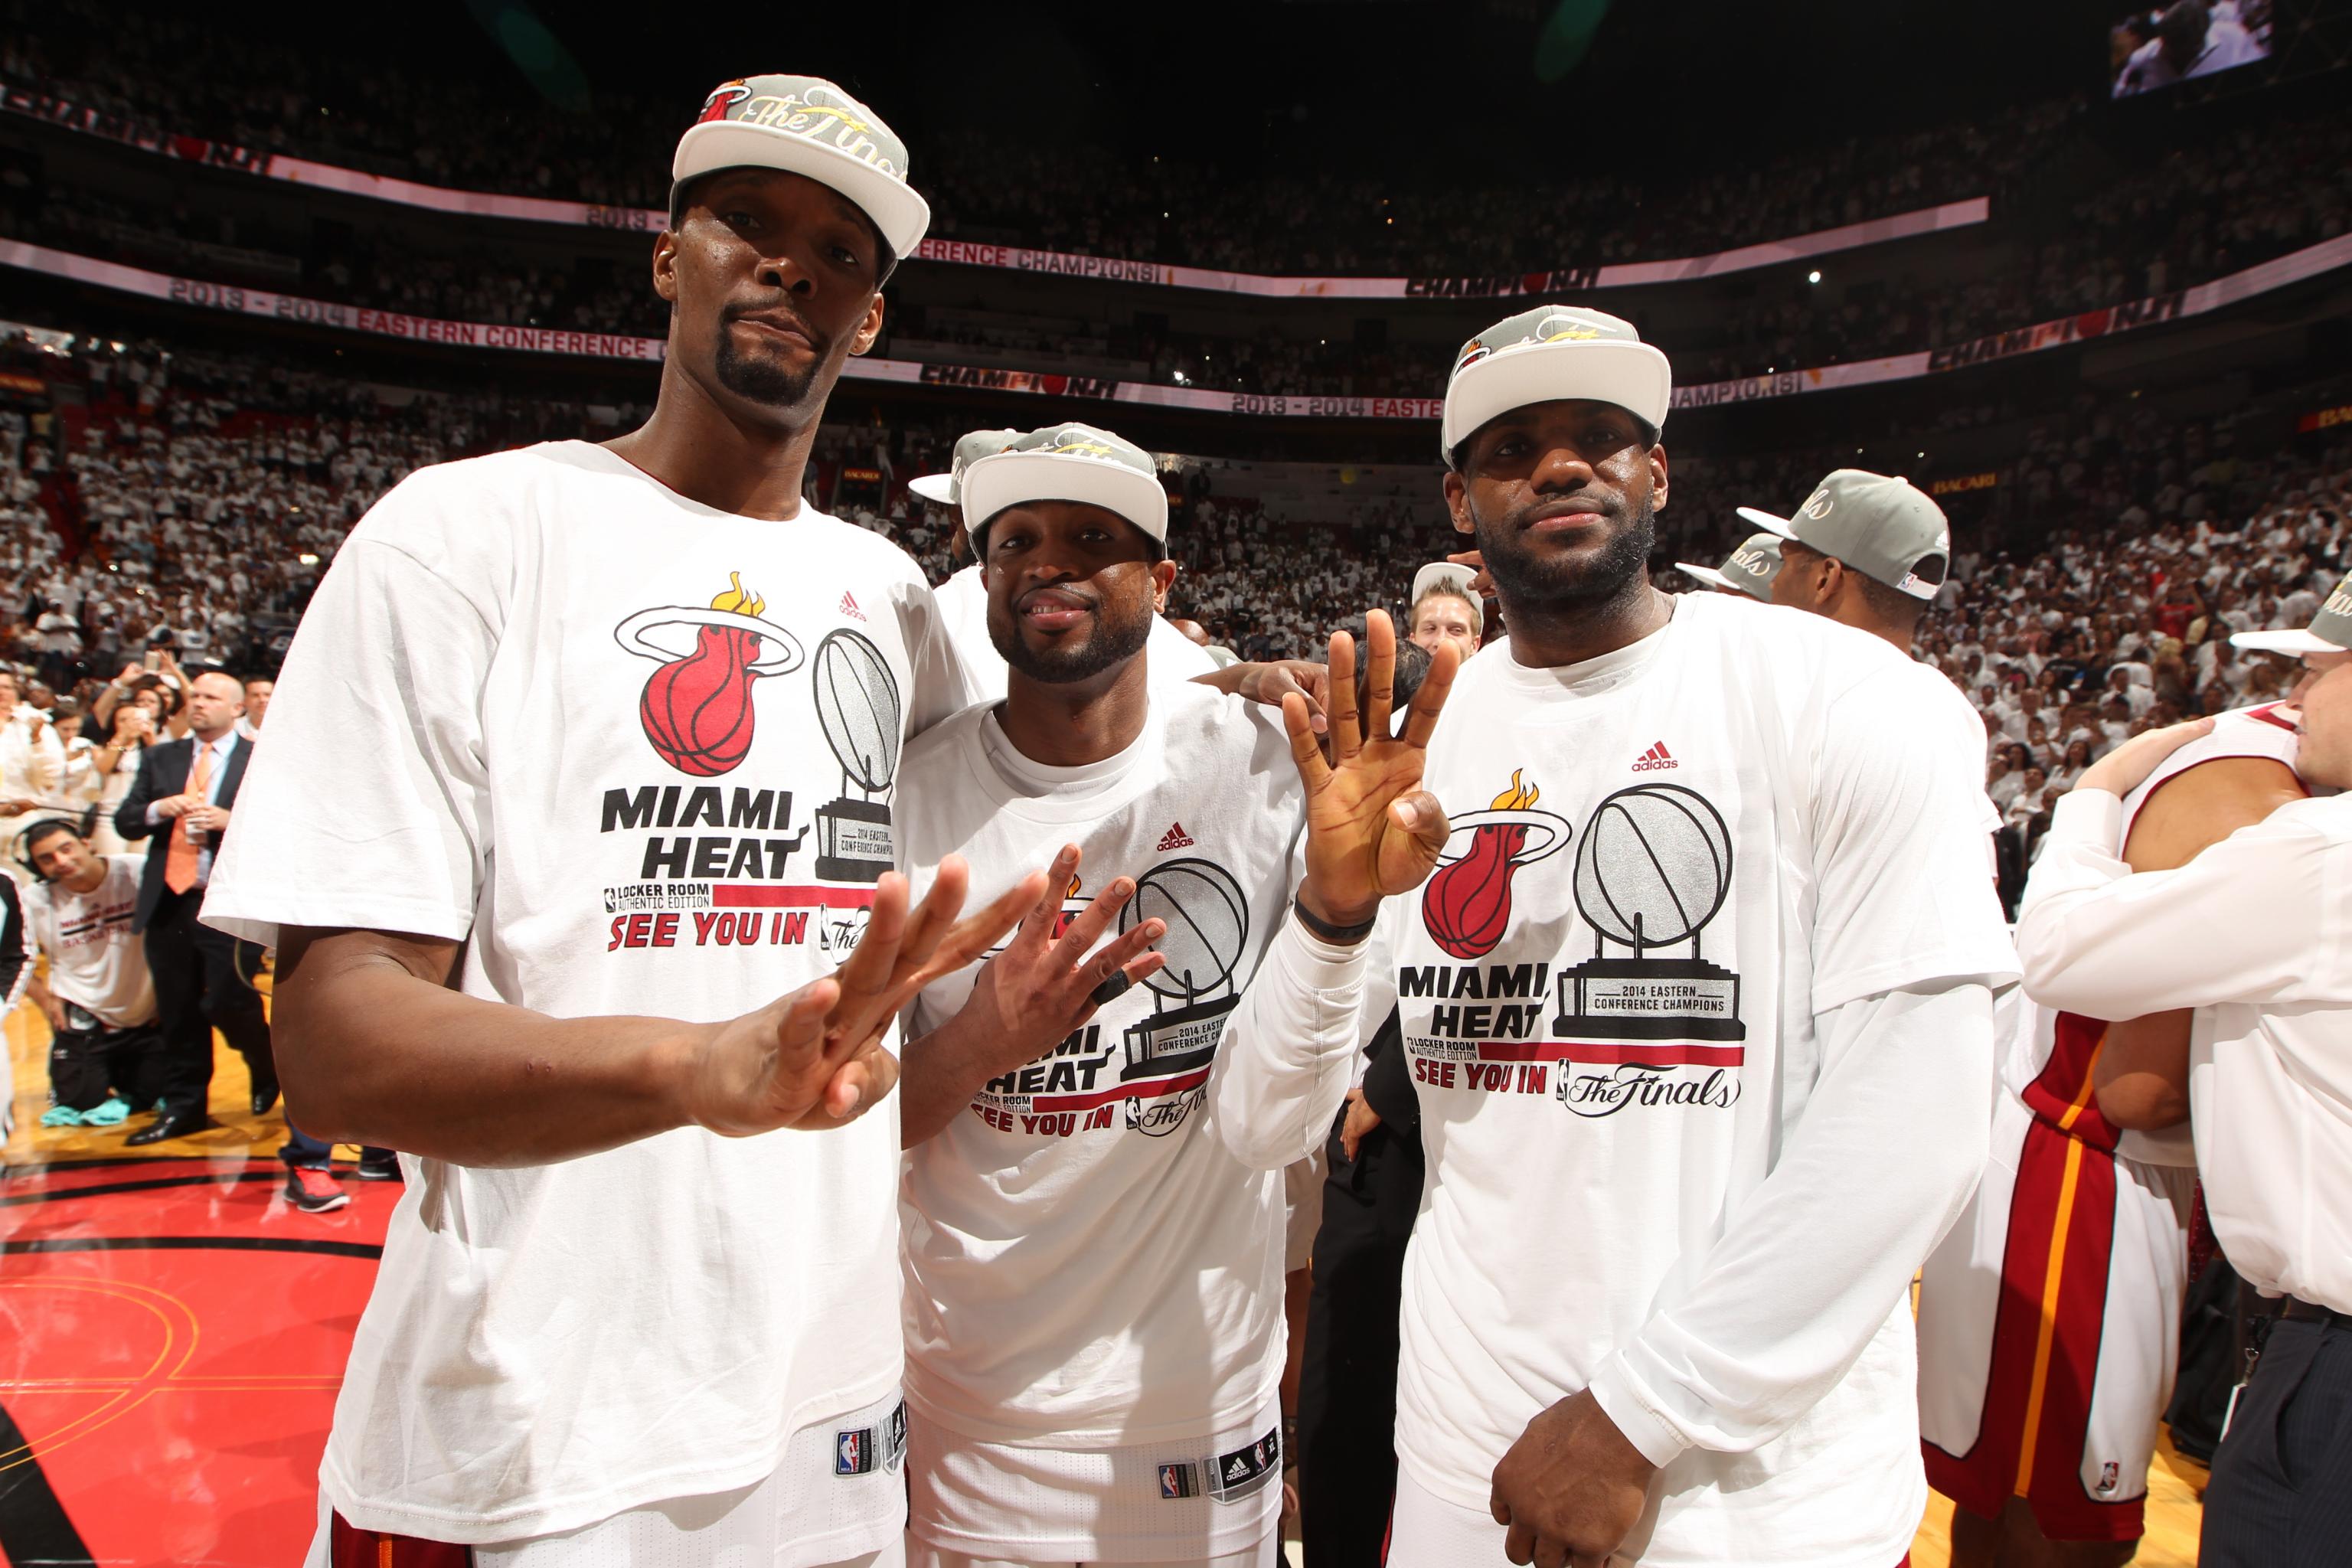 Rare Adidas 2013 NBA All-Star Miami Heat LeBron James Basketball